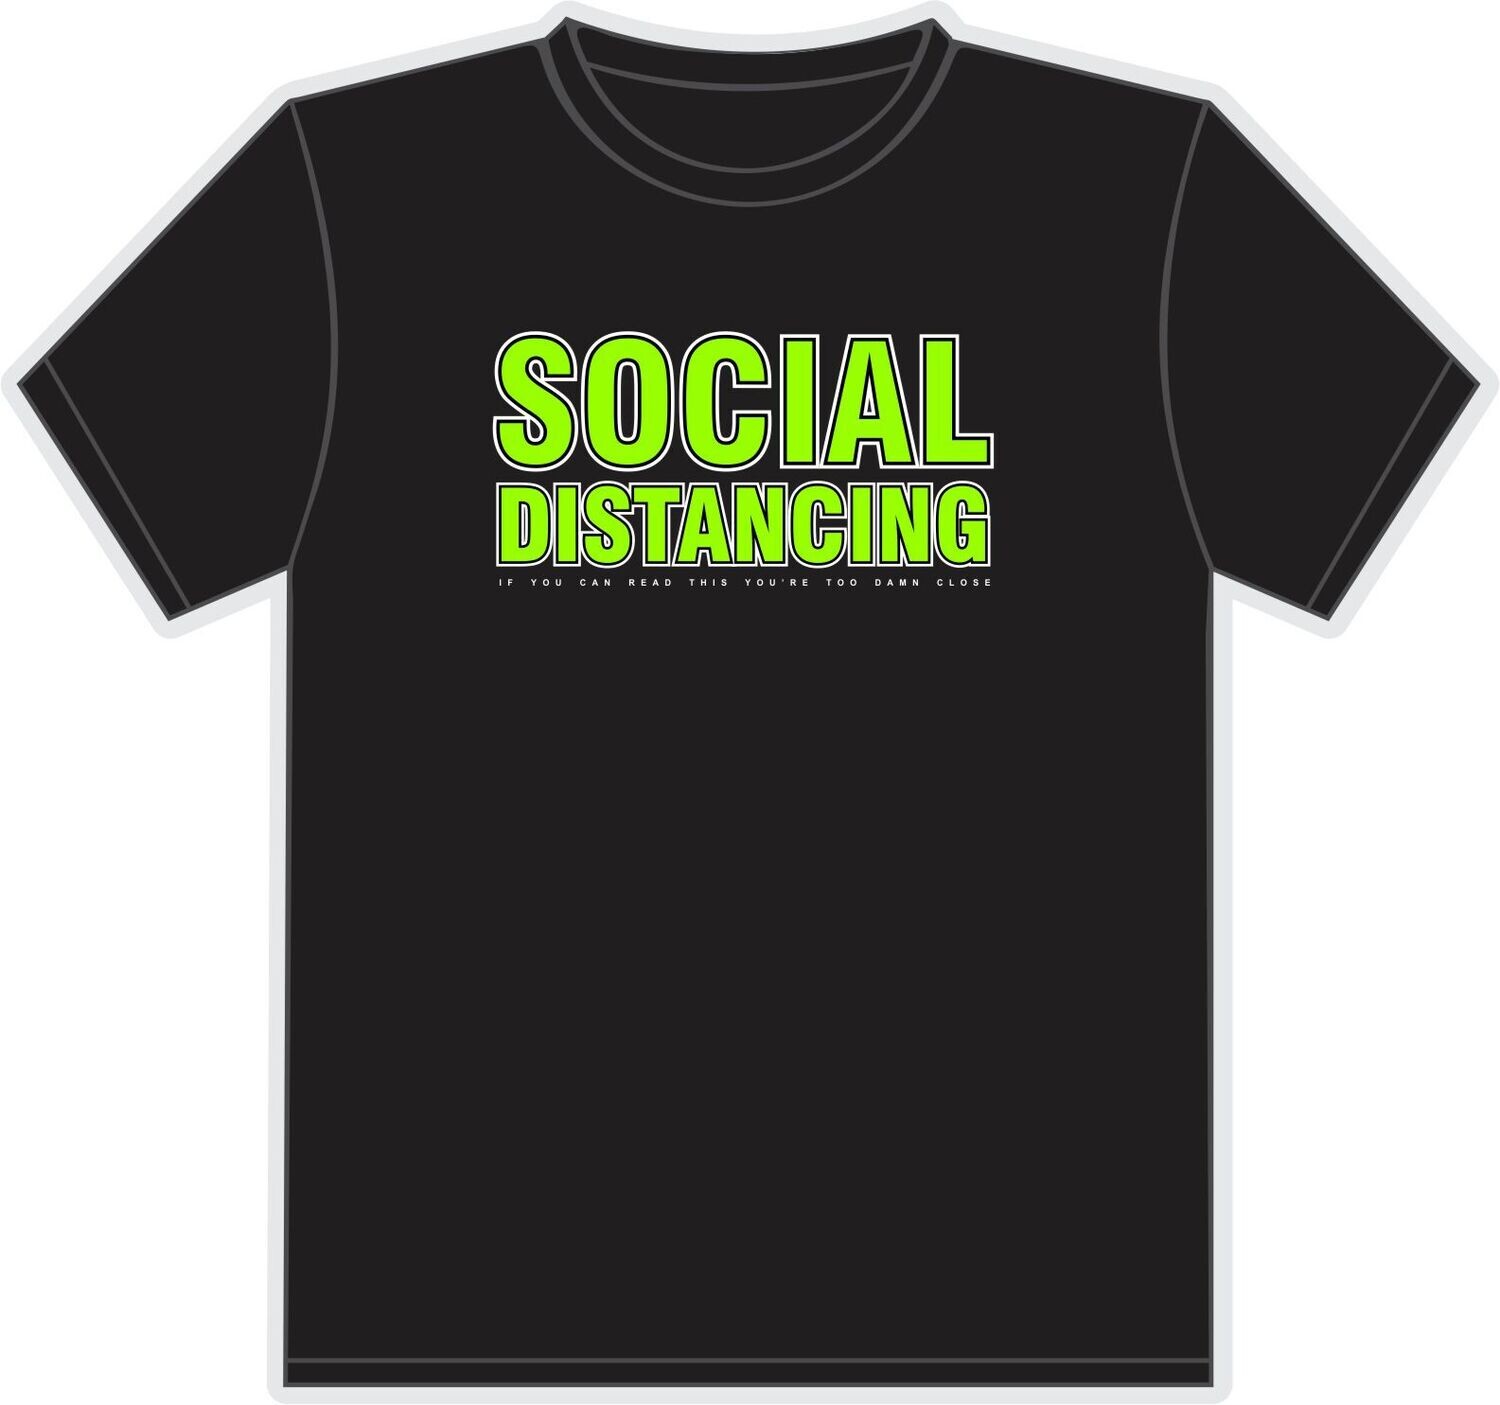 SOCIAL DISTANCING